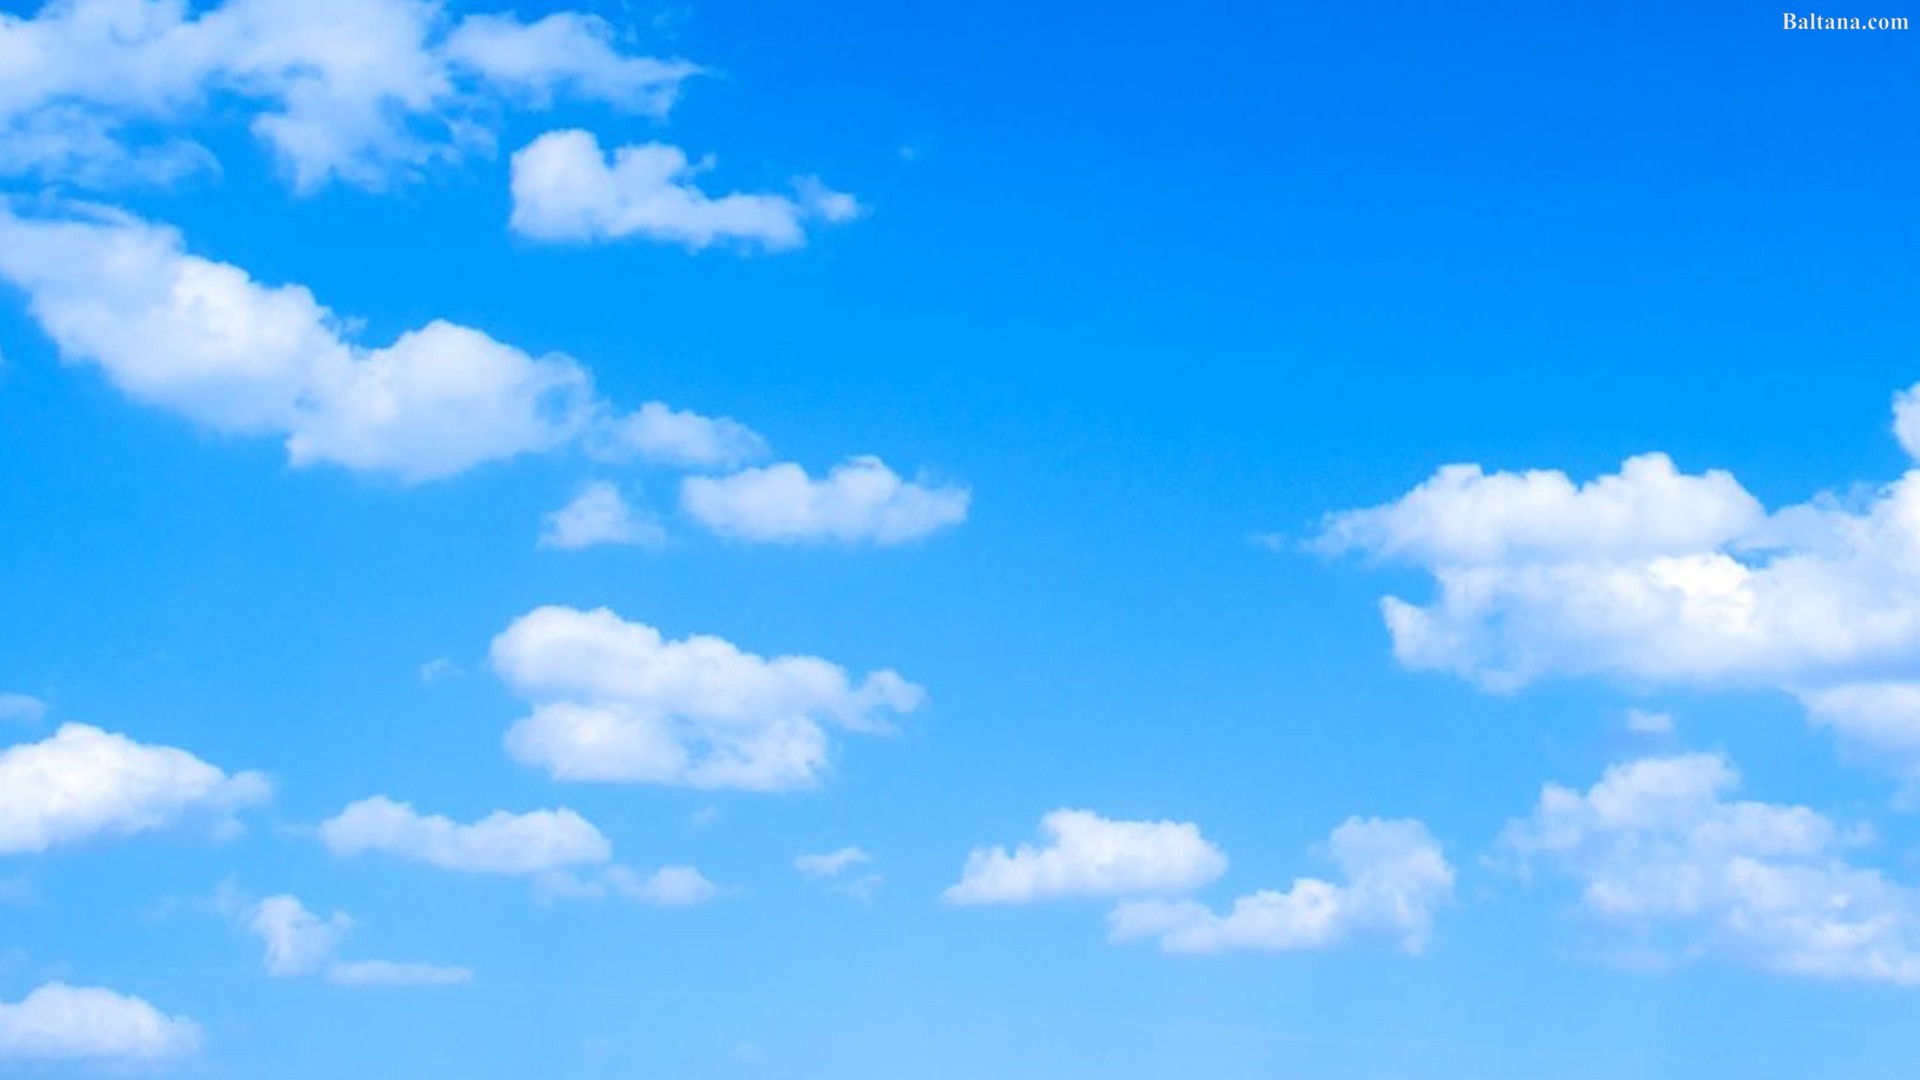 Blue Sky Hd Wallpaper Free Download : Download Clouds Wallpaper Hd ...